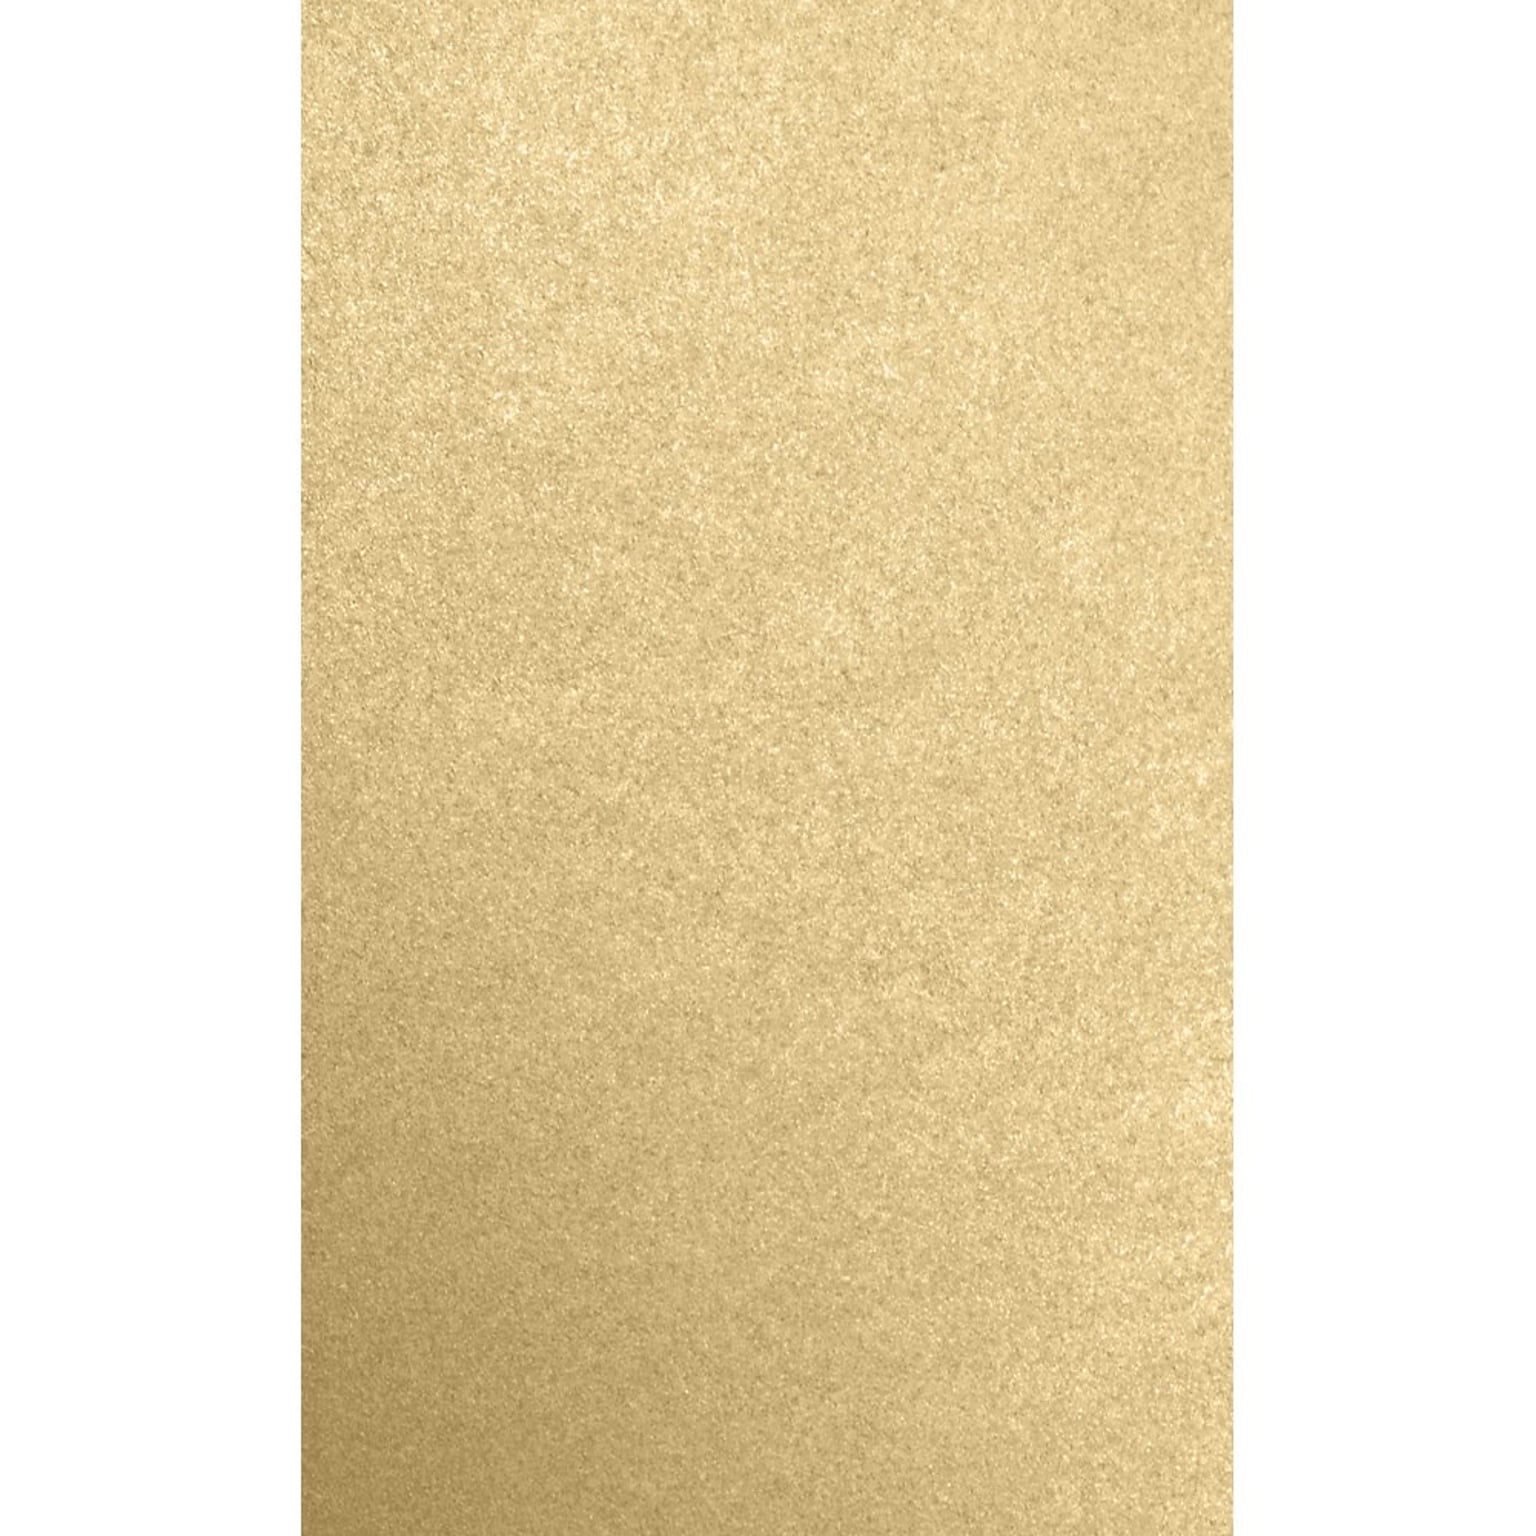 JAM Paper 8.5 x 14 Color Multipurpose Paper, 80 lbs., Blonde Metallic, 50 Sheets/Ream (81214-P-BLON-50)